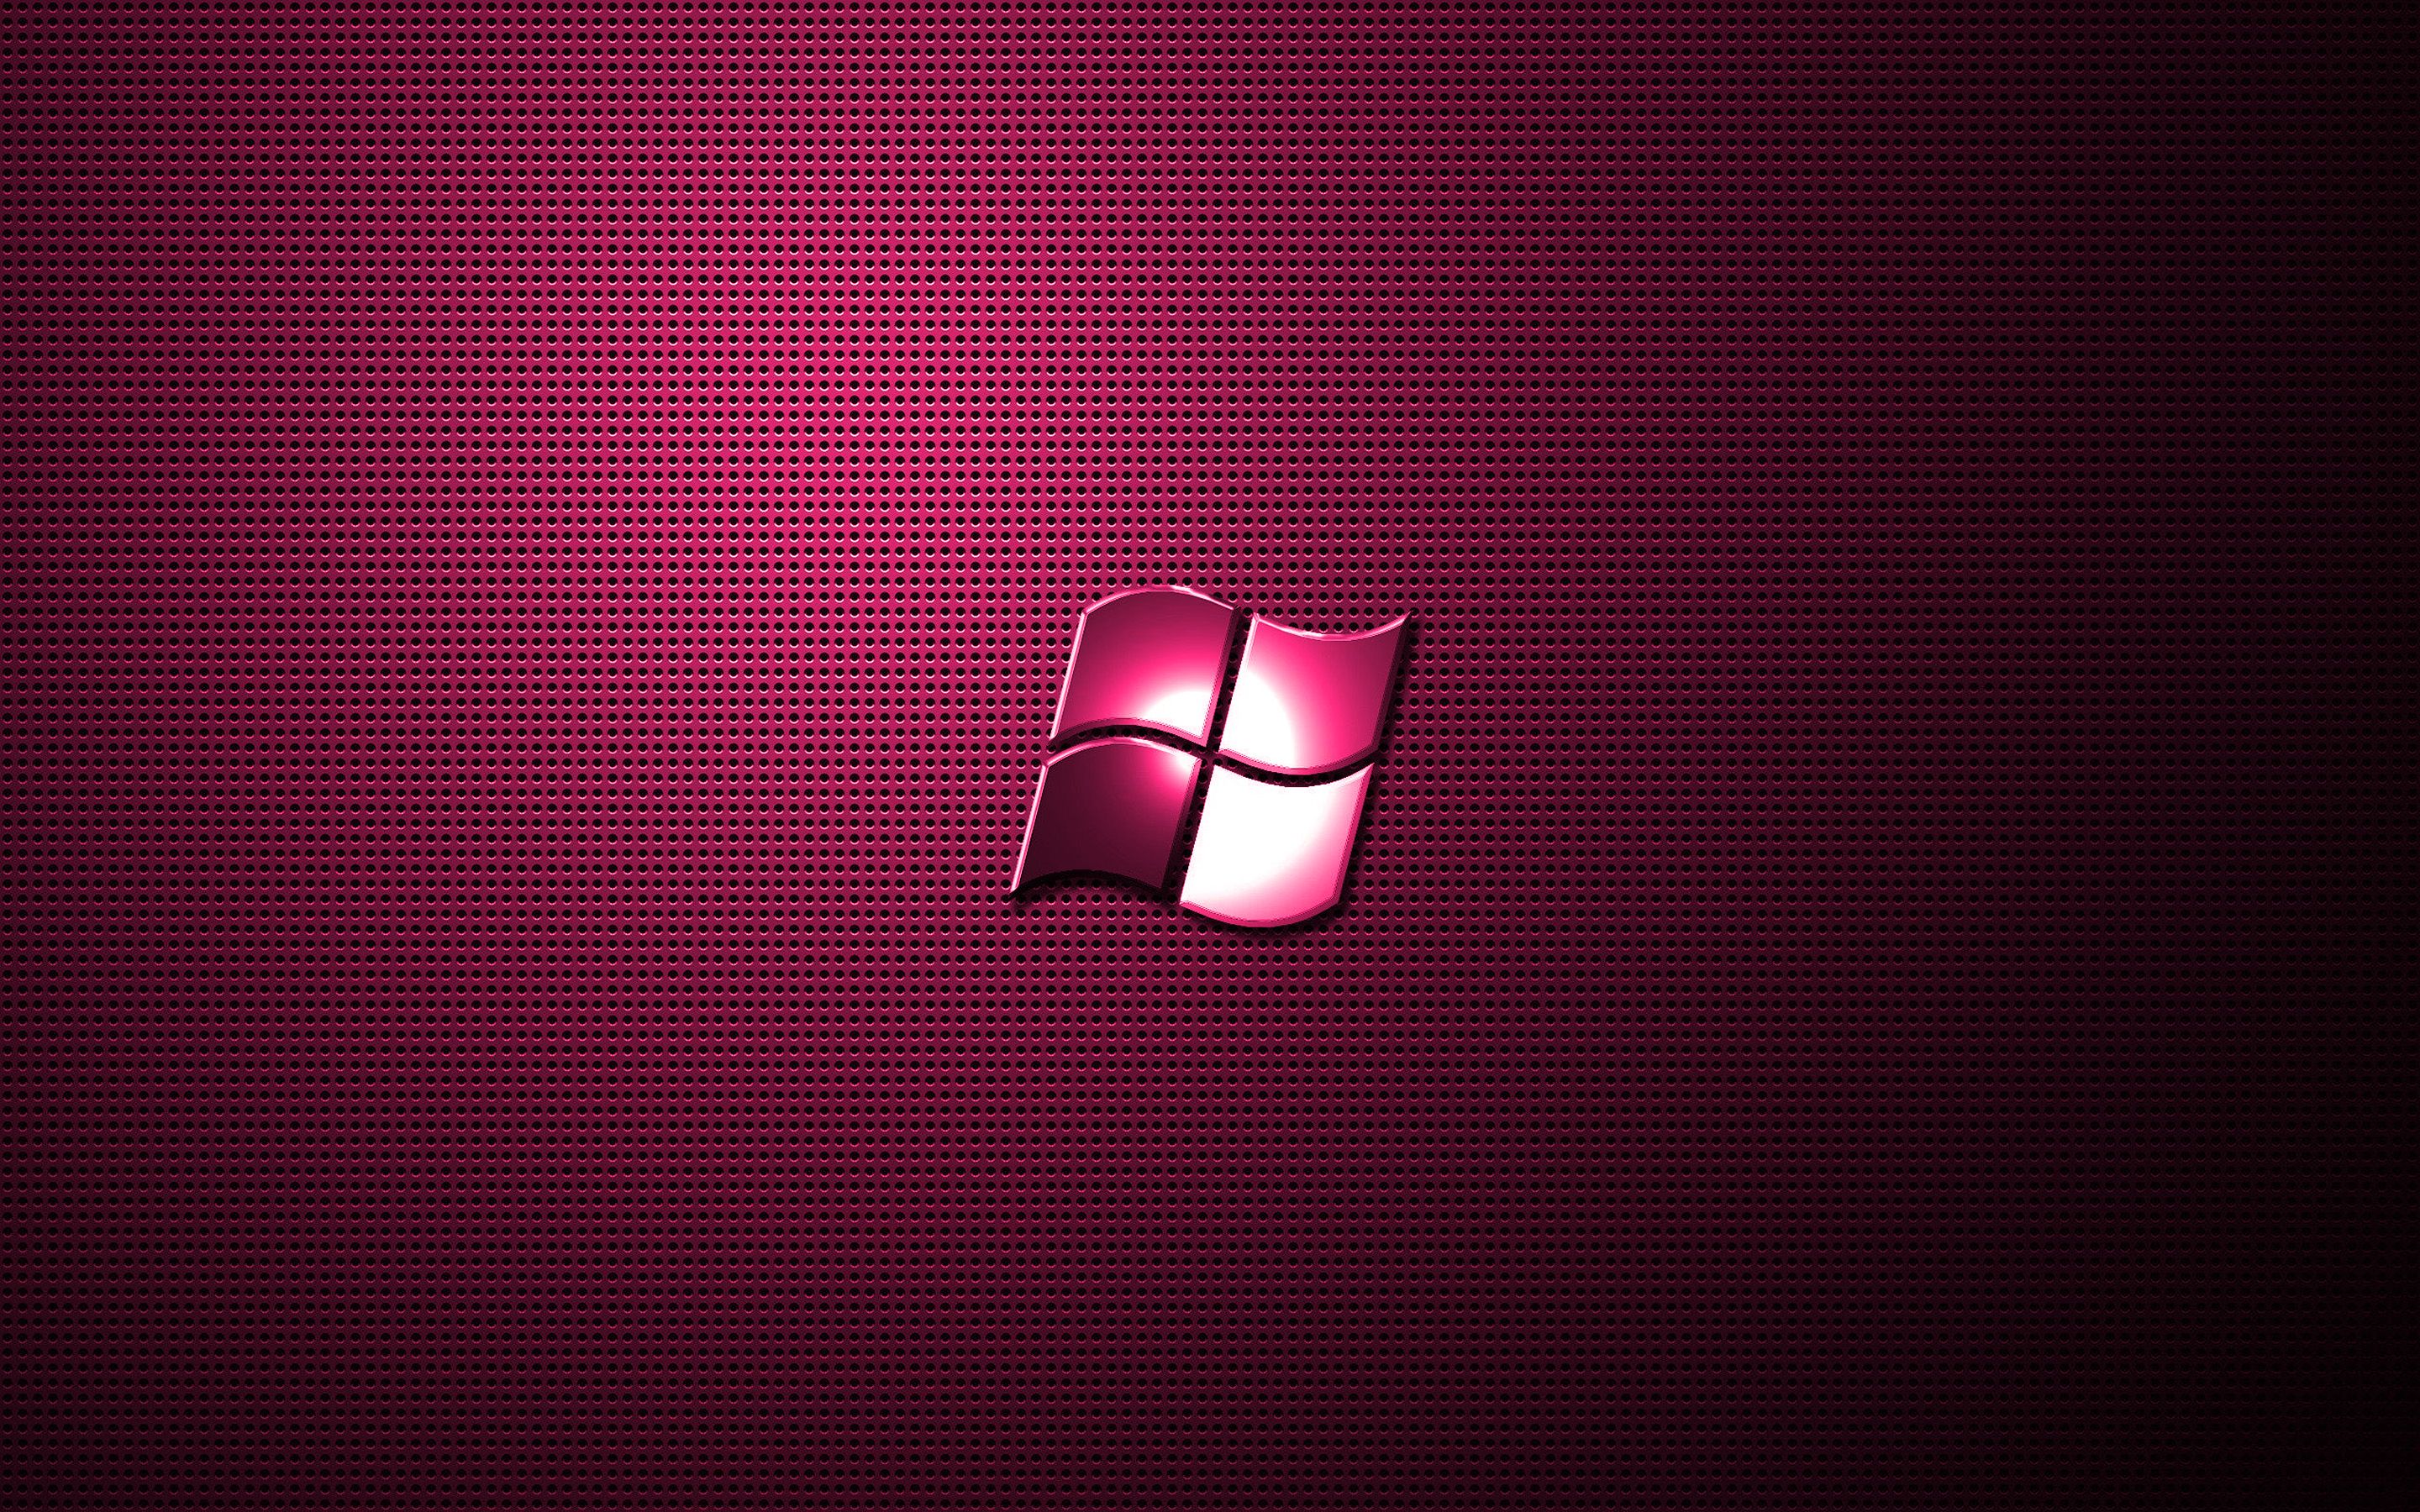 Download wallpaper Windows pink logo, artwork, metal grid background, Windows logo, creative, Windows, Windows metal logo for desktop with resolution 2880x1800. High Quality HD picture wallpaper